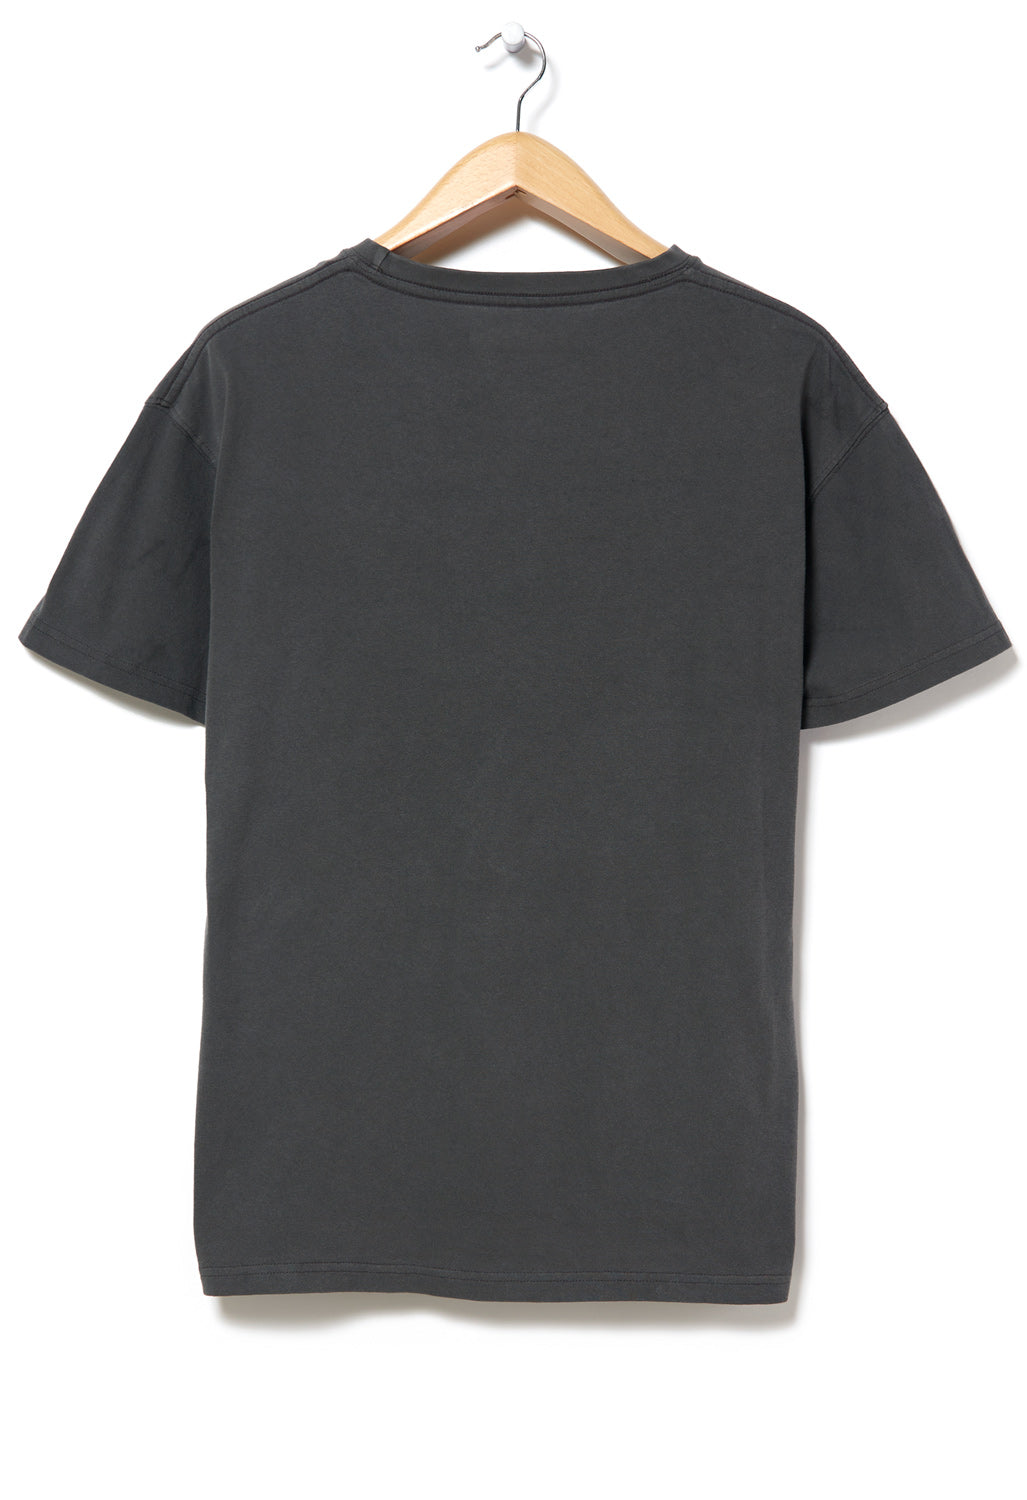 KAVU Men's Spellout T-Shirt - Black Licorice